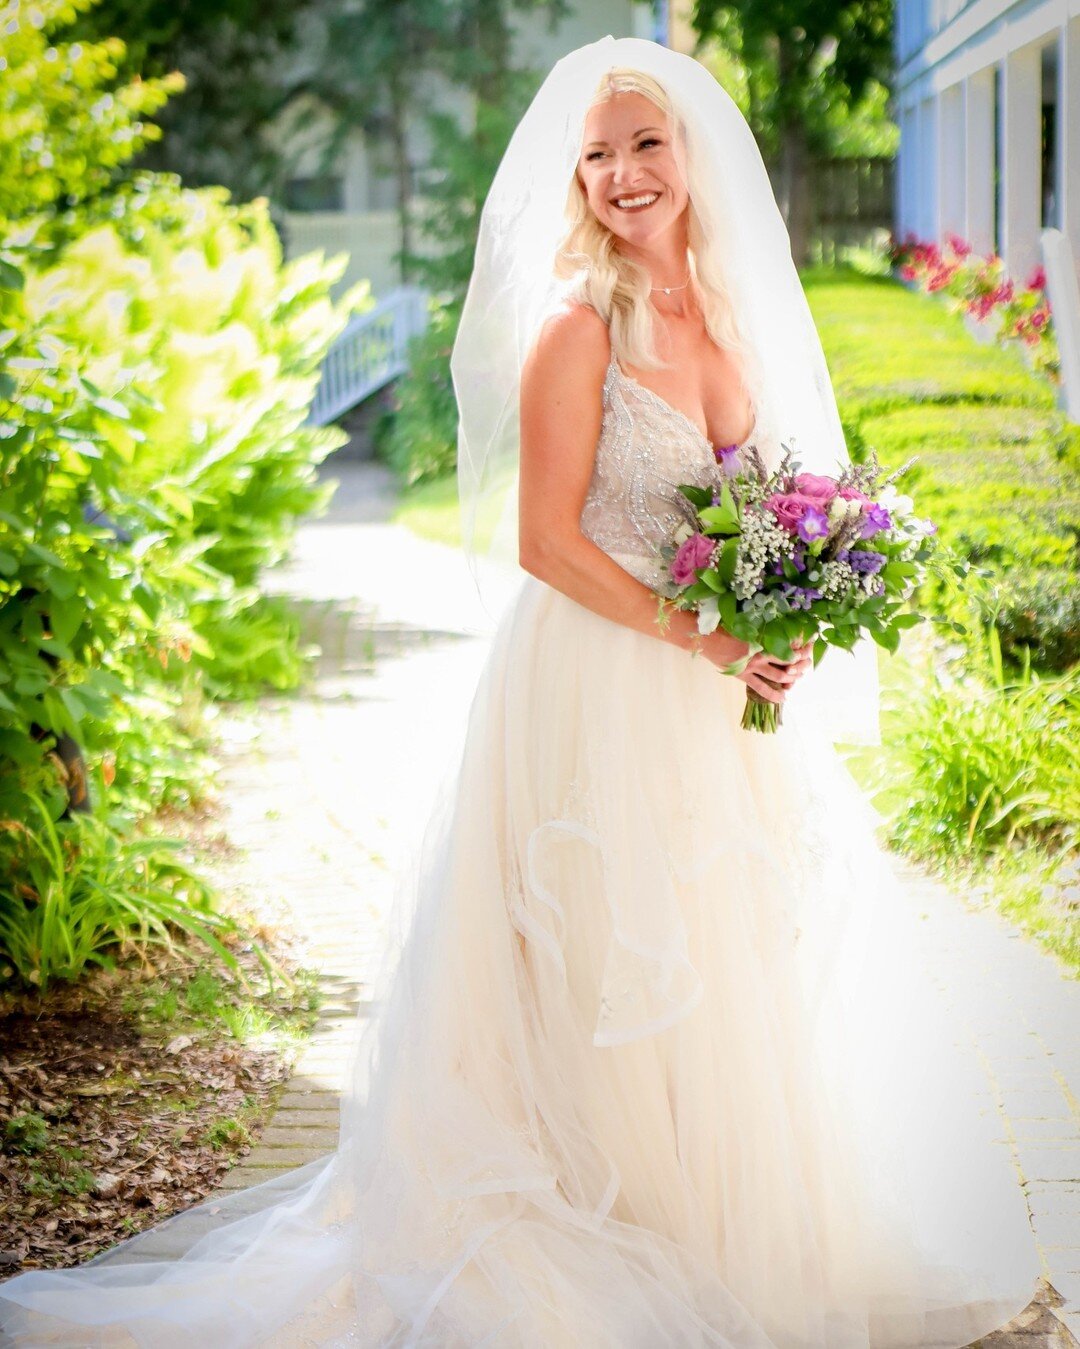 Celebrating the many beautiful brides and their smiles! 
#marriedonmackinac #mackinacisland #puremichiganweddings #bride #mackinacislandwedding #intimateweddings #HarbourViewInn 
#mackinacisland